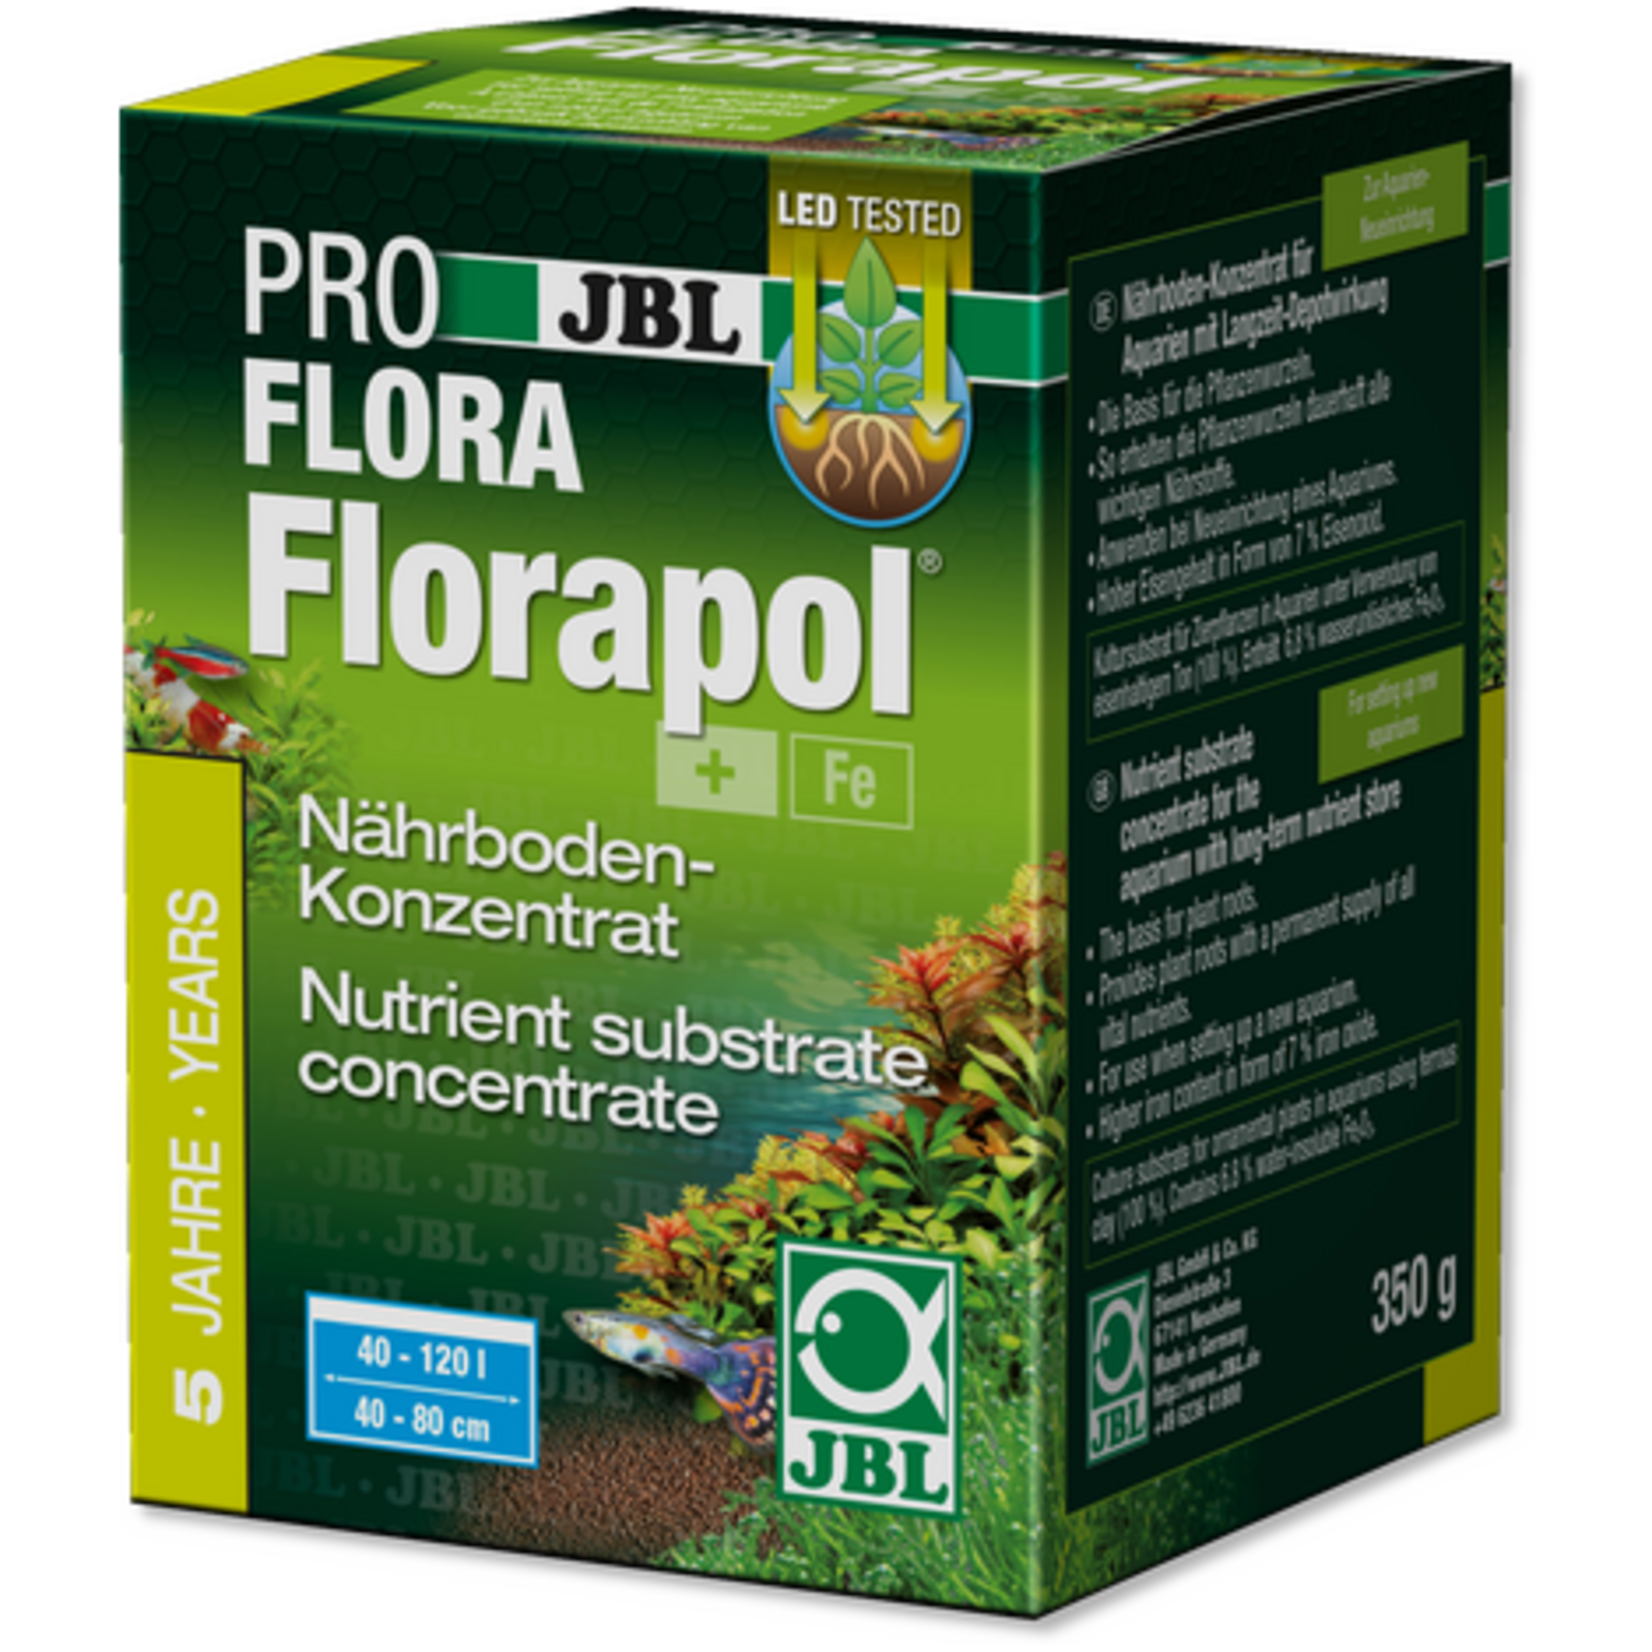 JBL Proflora florapol 350g